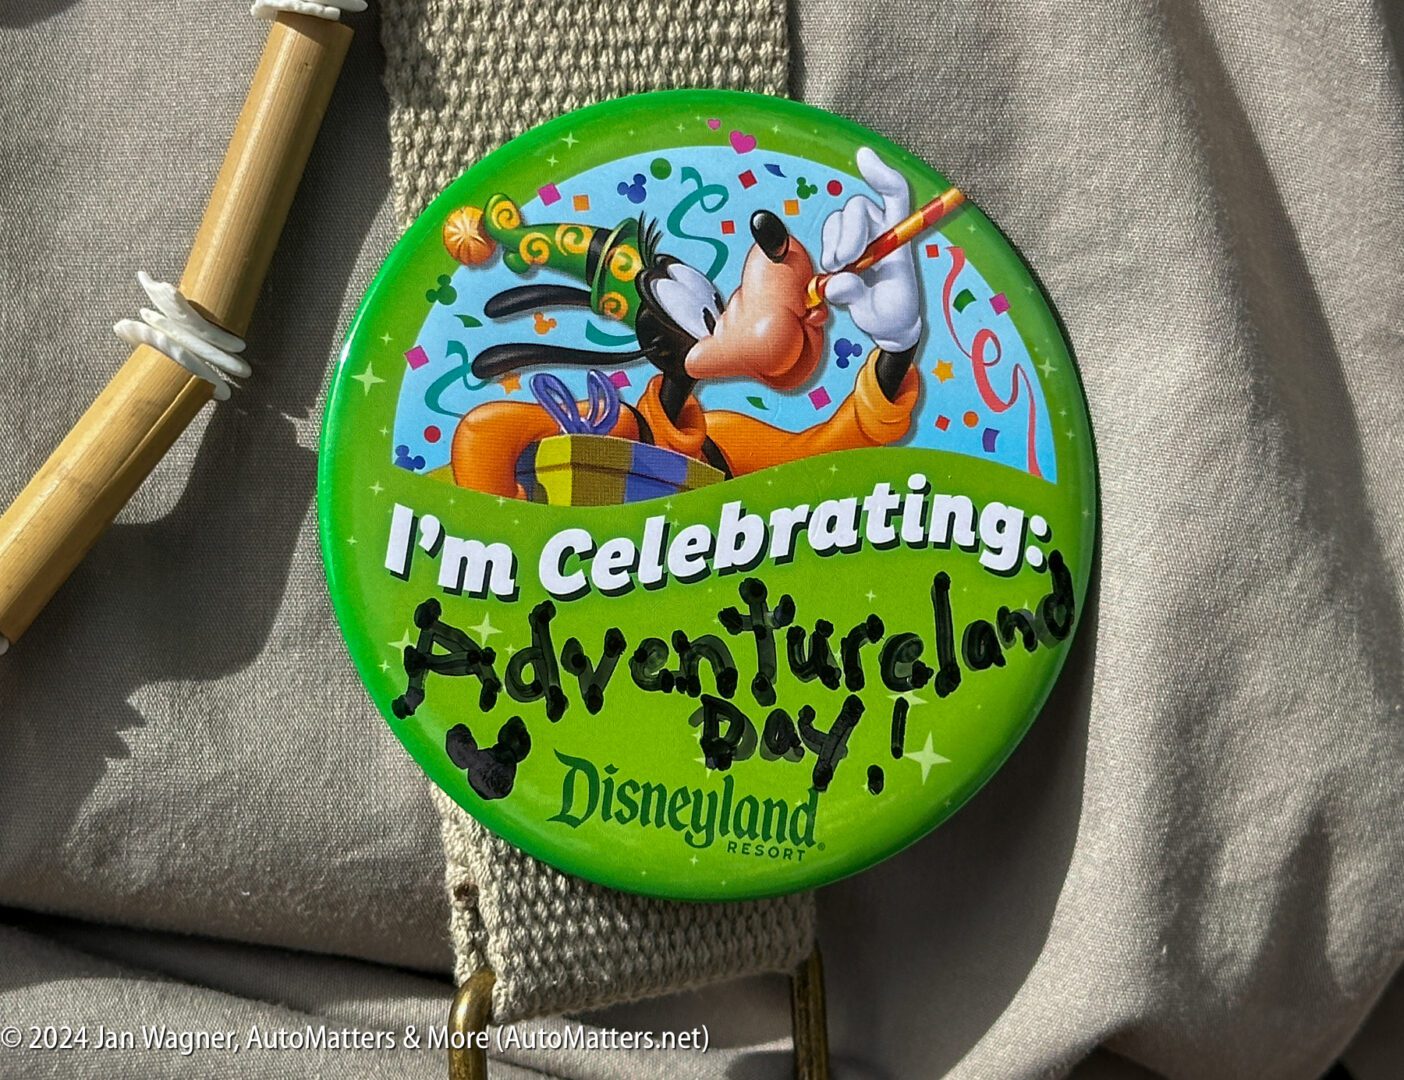 I'm celebrating adventureland day at disneyland.